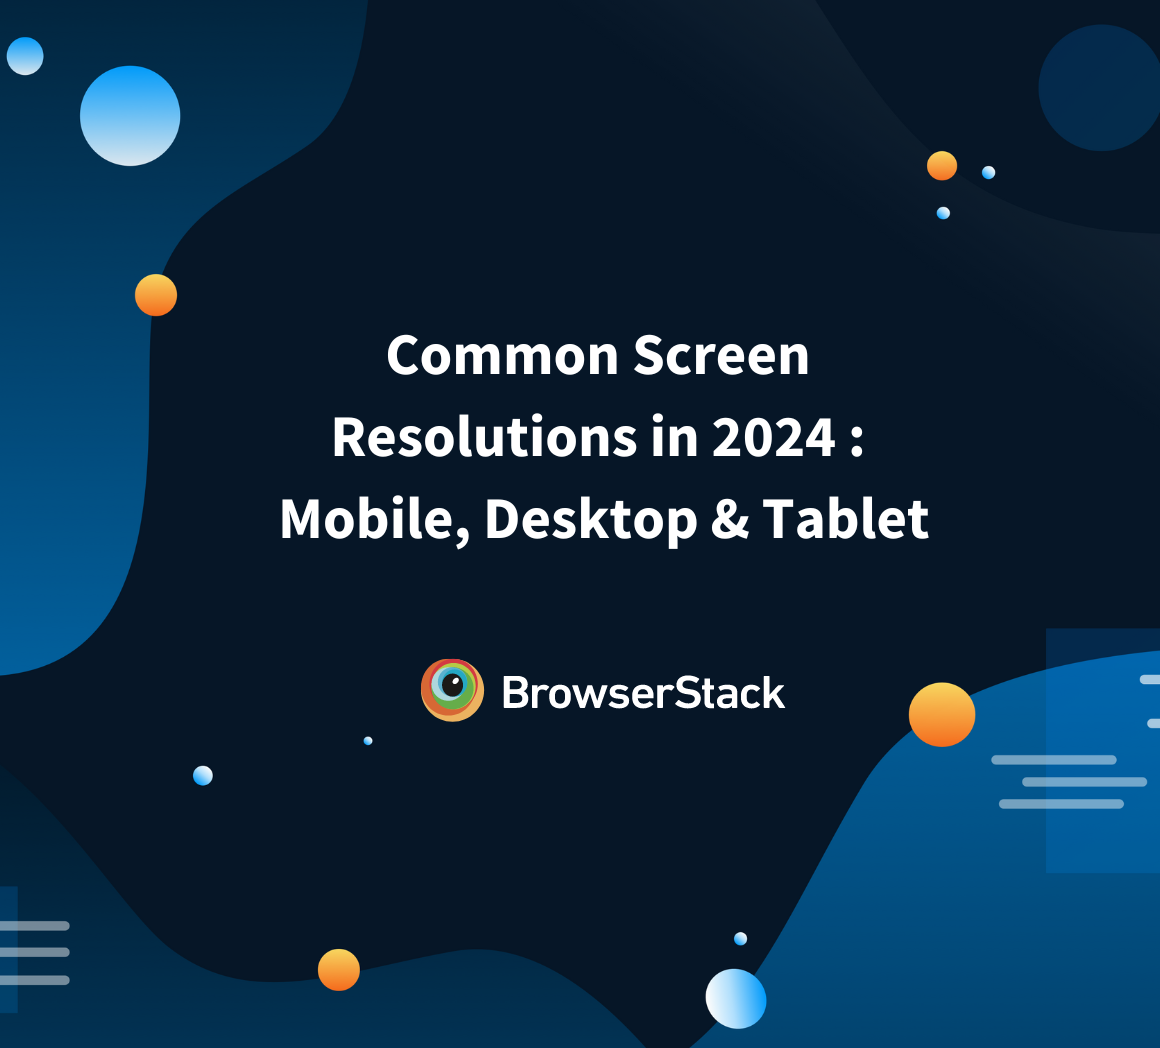 Common Screen Resolutions in 2024 Mobile, Desktop & Tablet